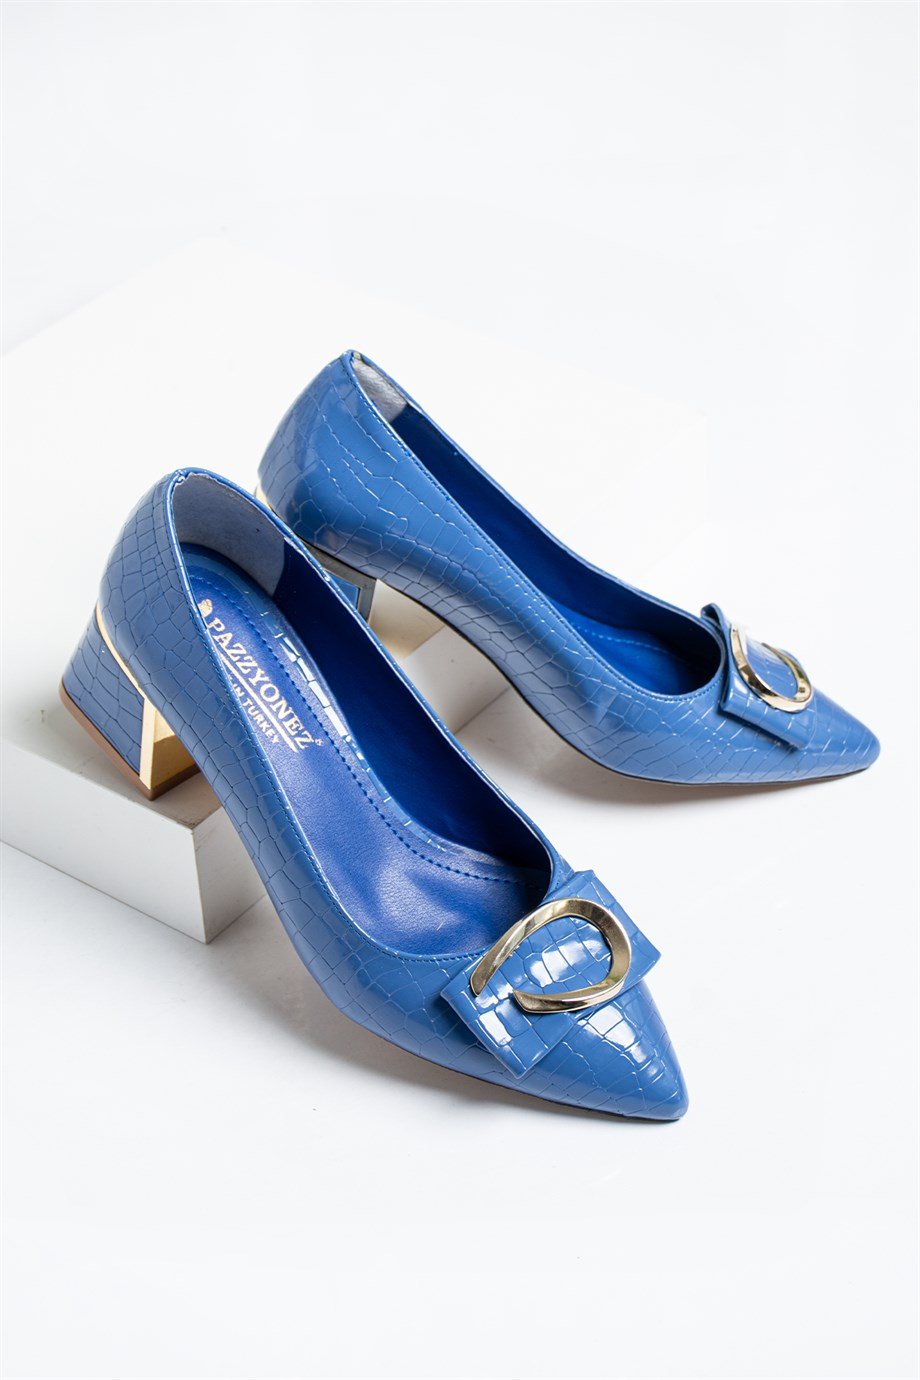 Pazzyonez GABBIA gold topuk detaylı lazer taş aksesuar Mavi kadın topuklu  ayakkabı